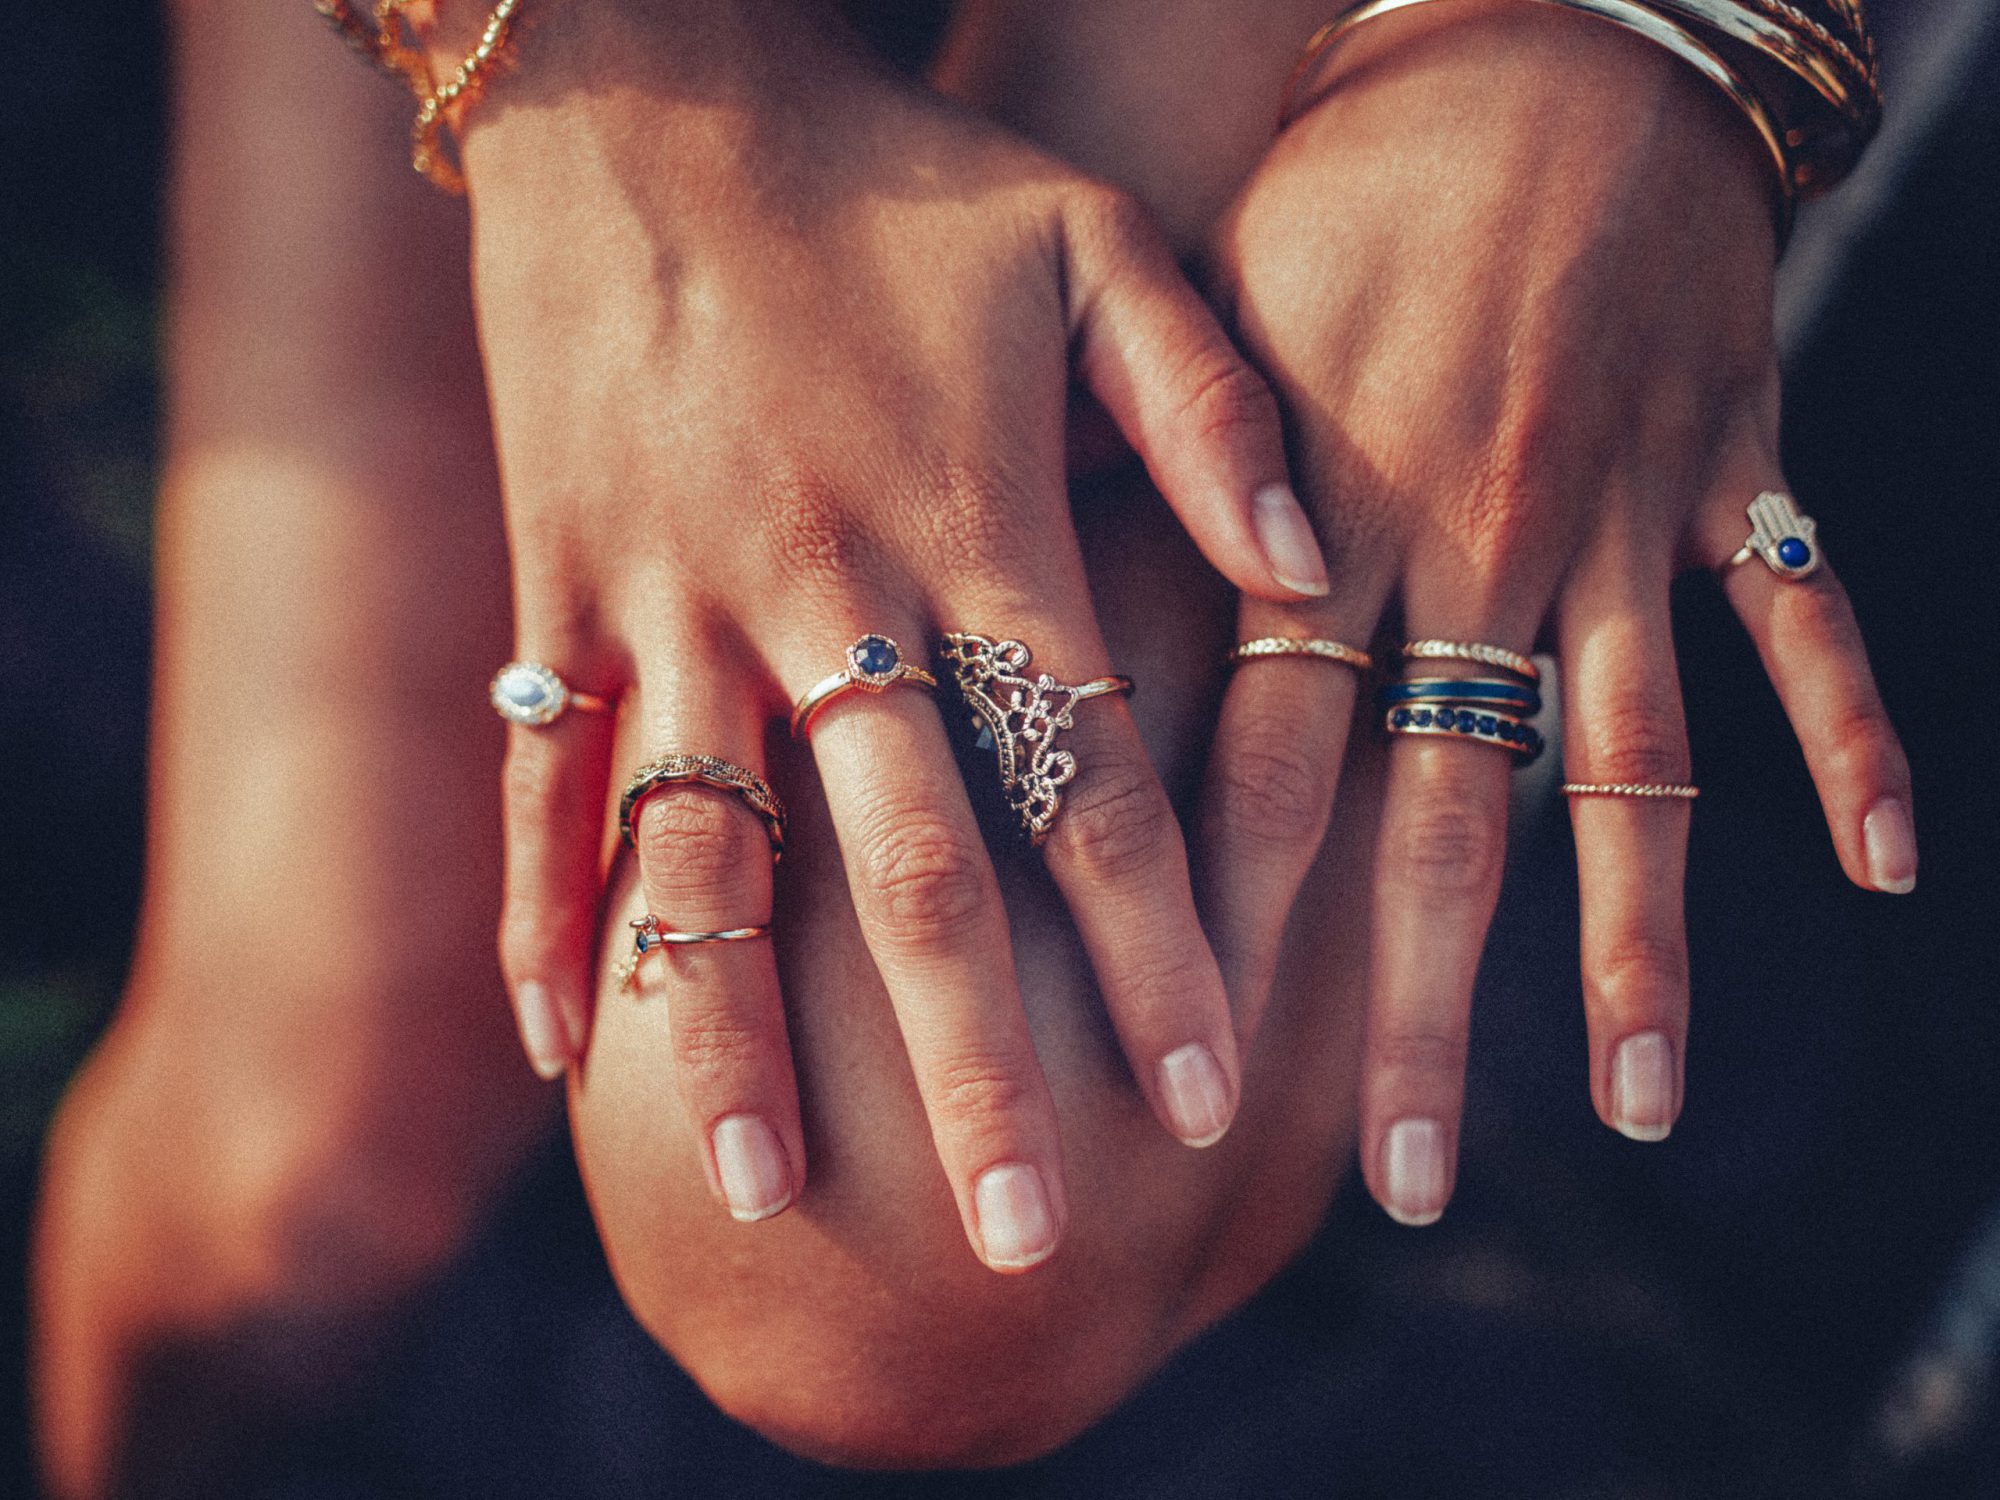 Hands wearing jewelry